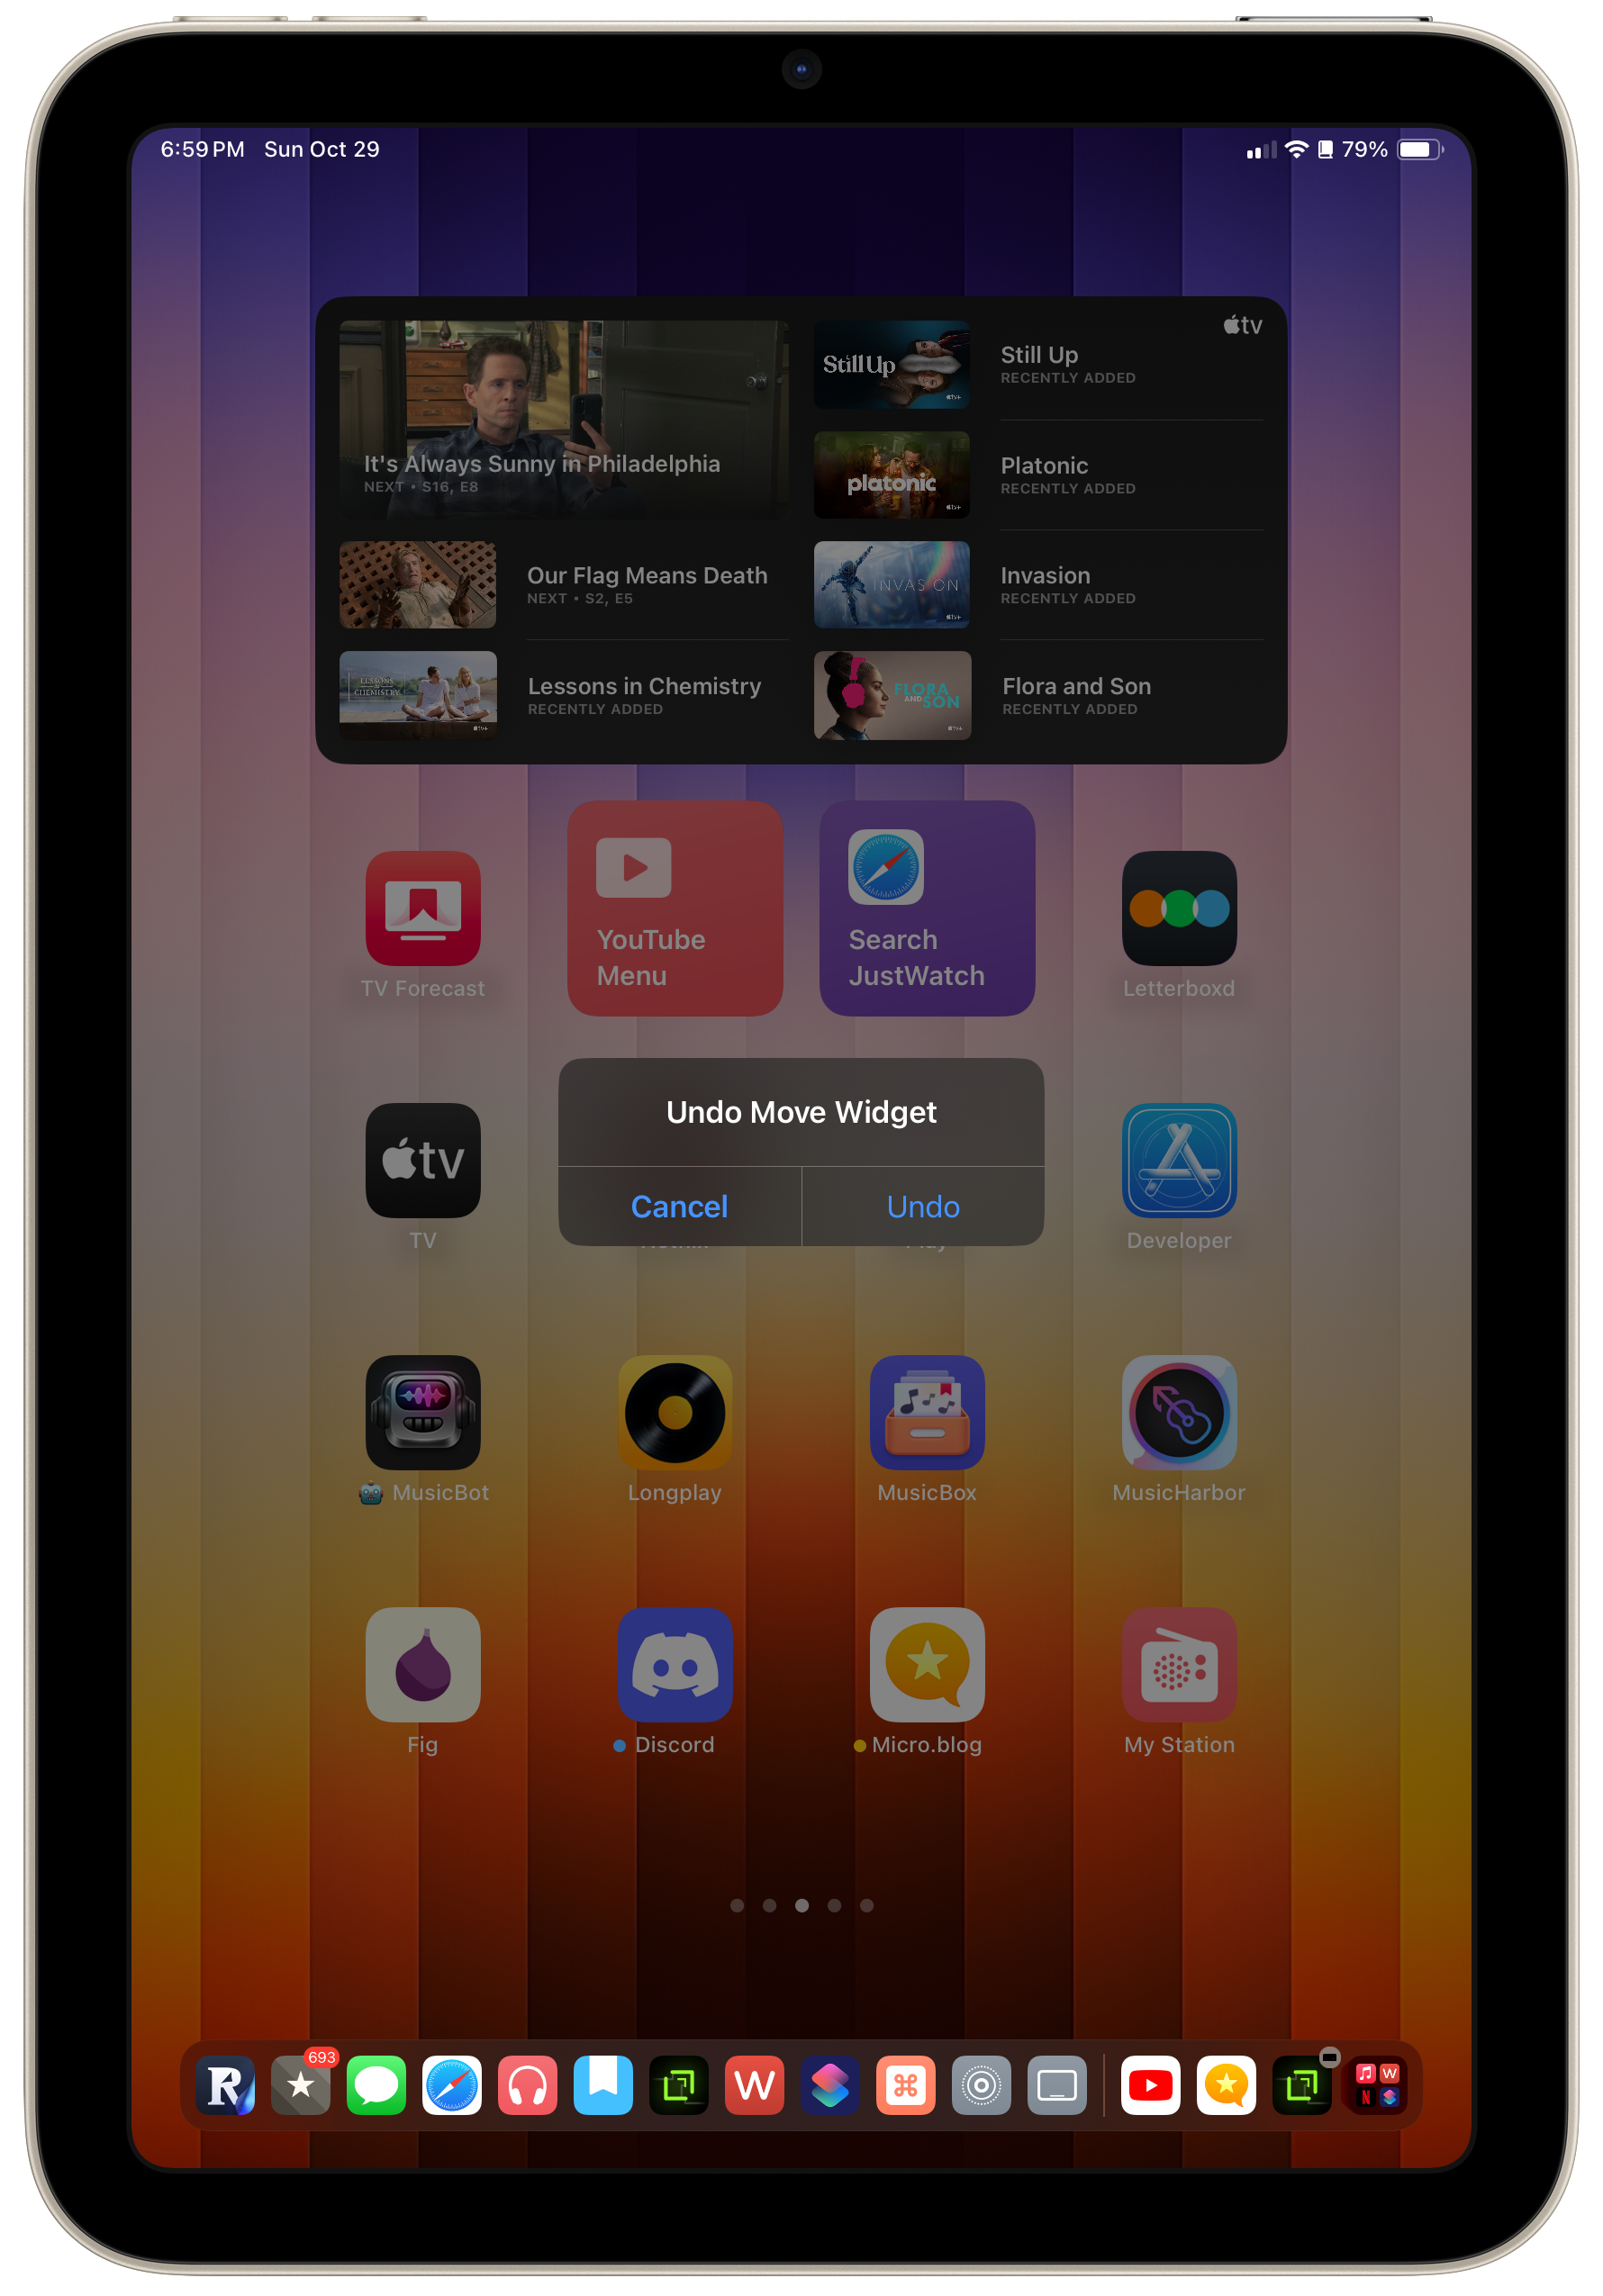 iPad Home Screen showing an ‘Undo Move Widget’ popup.